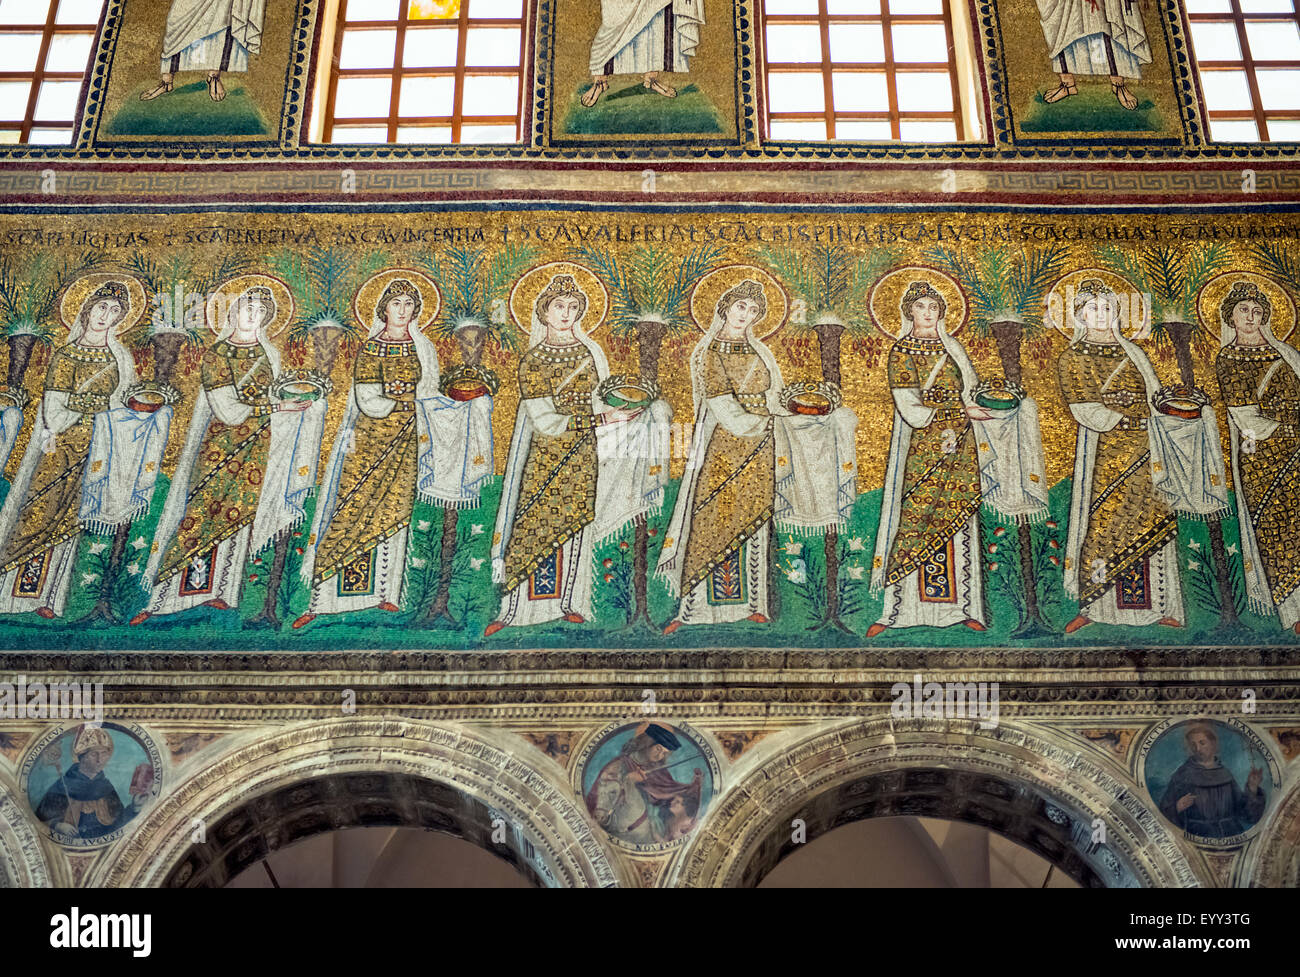 Tile mosaic and ornate architecture in Basilica di Sant'Apollinare, Ravenna, Ravenna, Italy Stock Photo